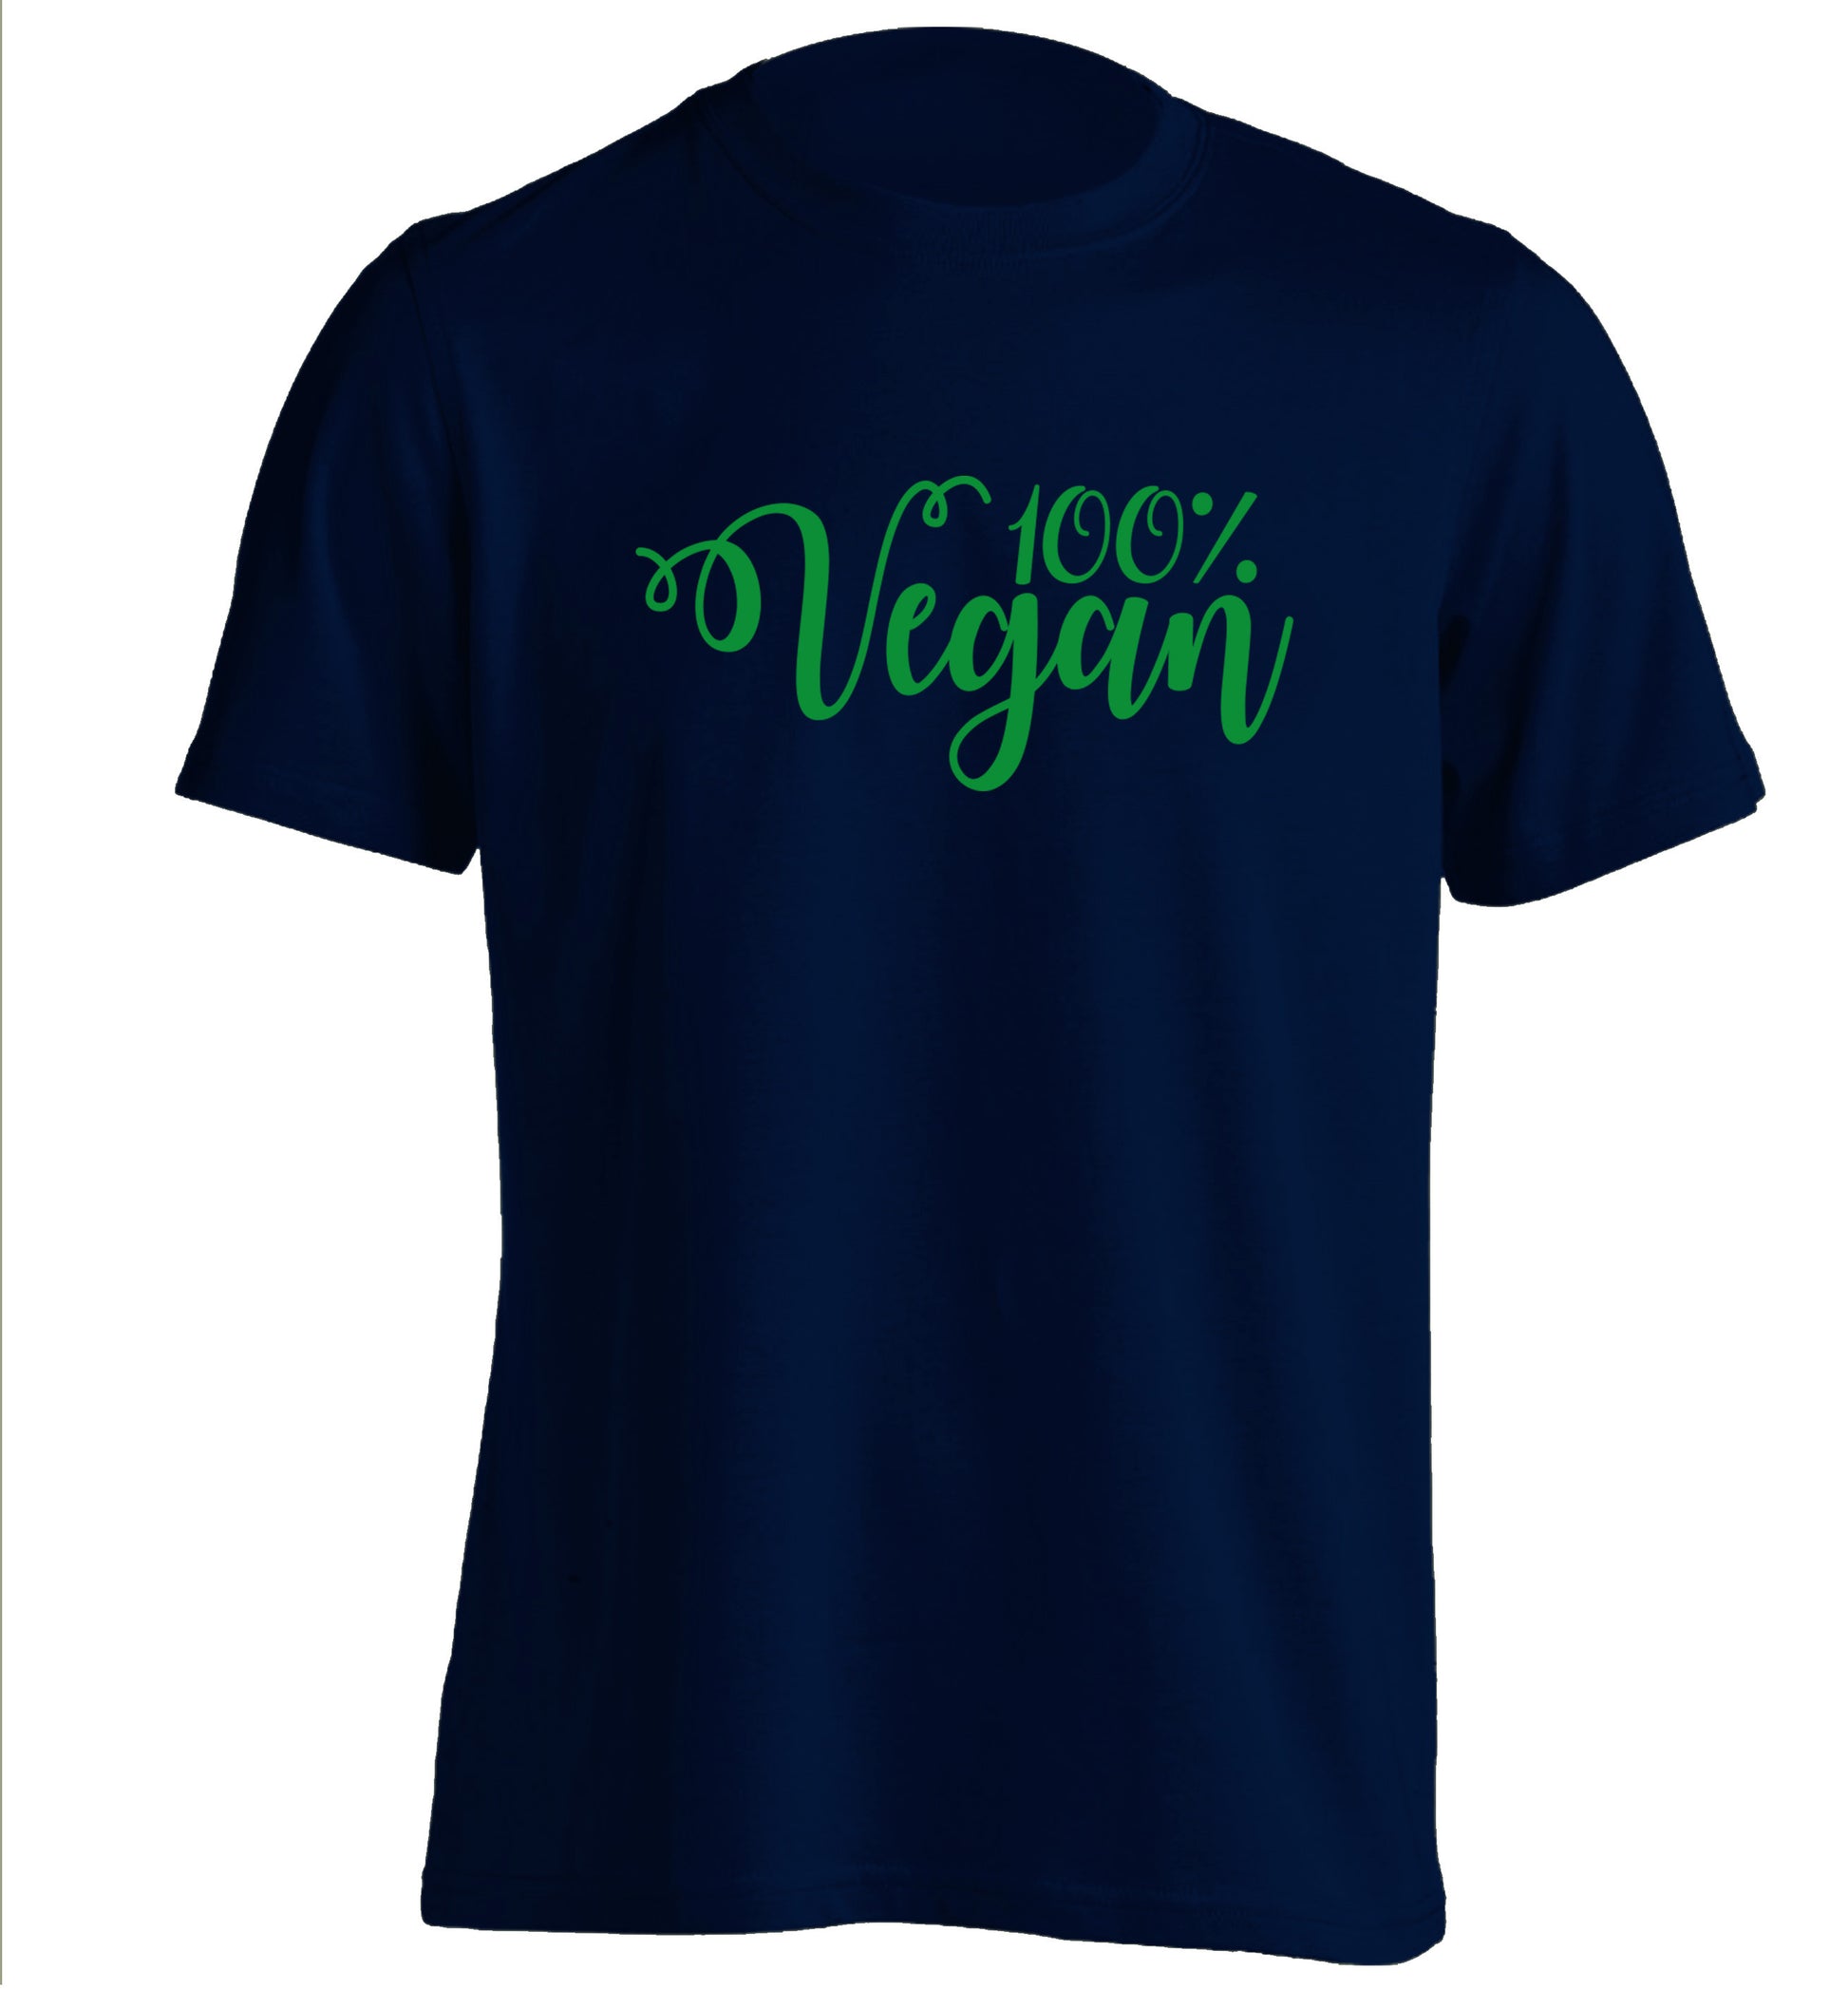 100% Vegan adults unisex navy Tshirt 2XL